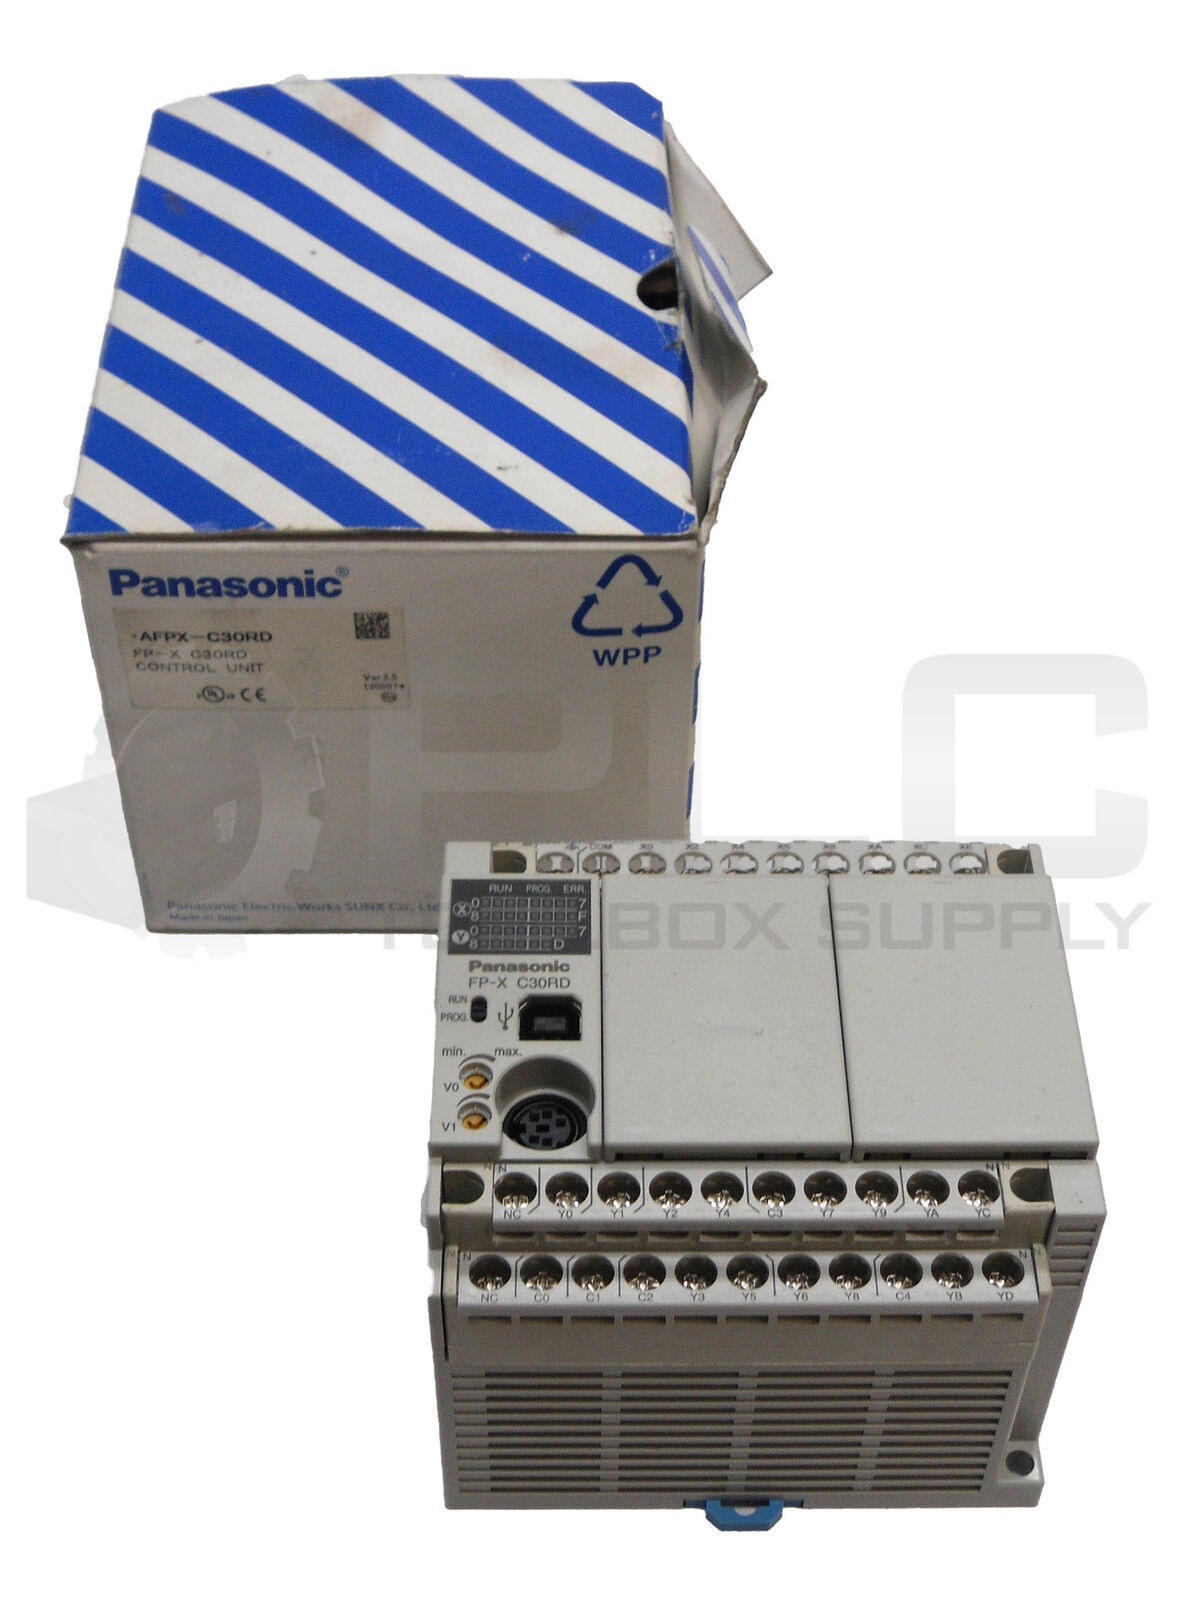 NEW PANASONIC MATSUSHITA AFPX-C30RD CONTROL UNIT FP-X C30RD 2A 250V